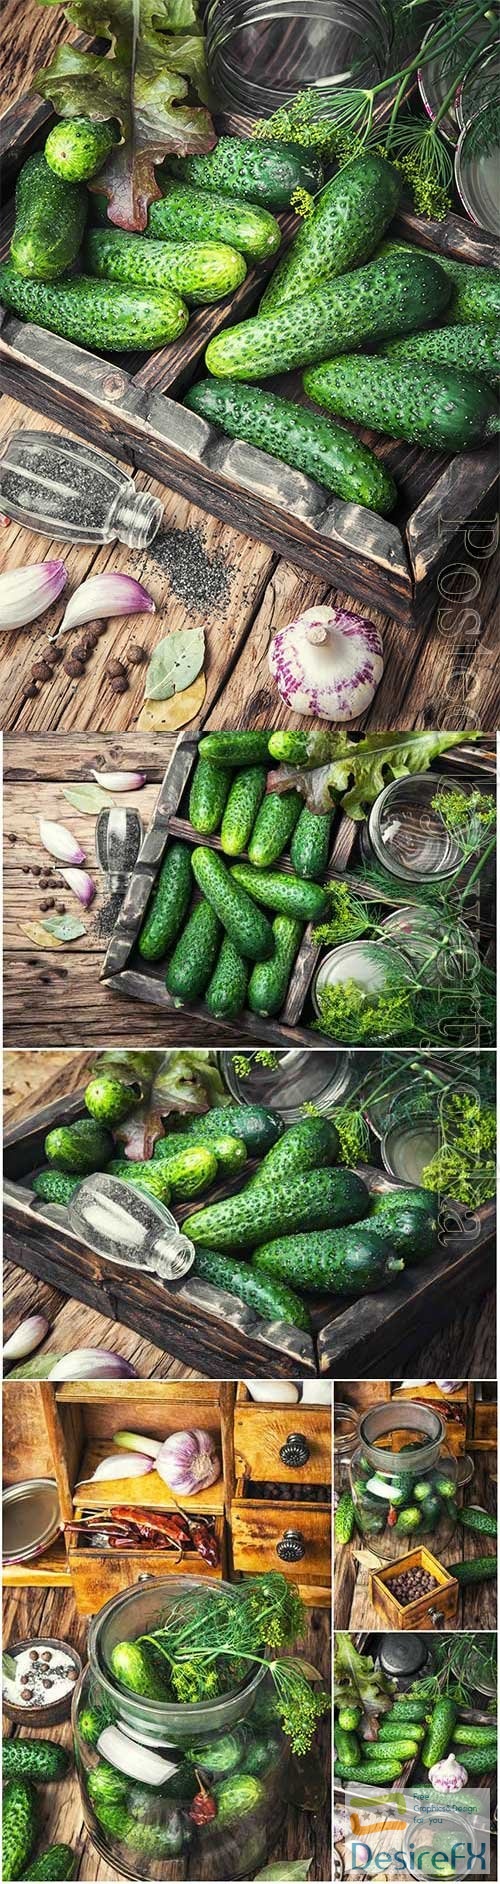 Cucumbers, garlic and dill stock photo